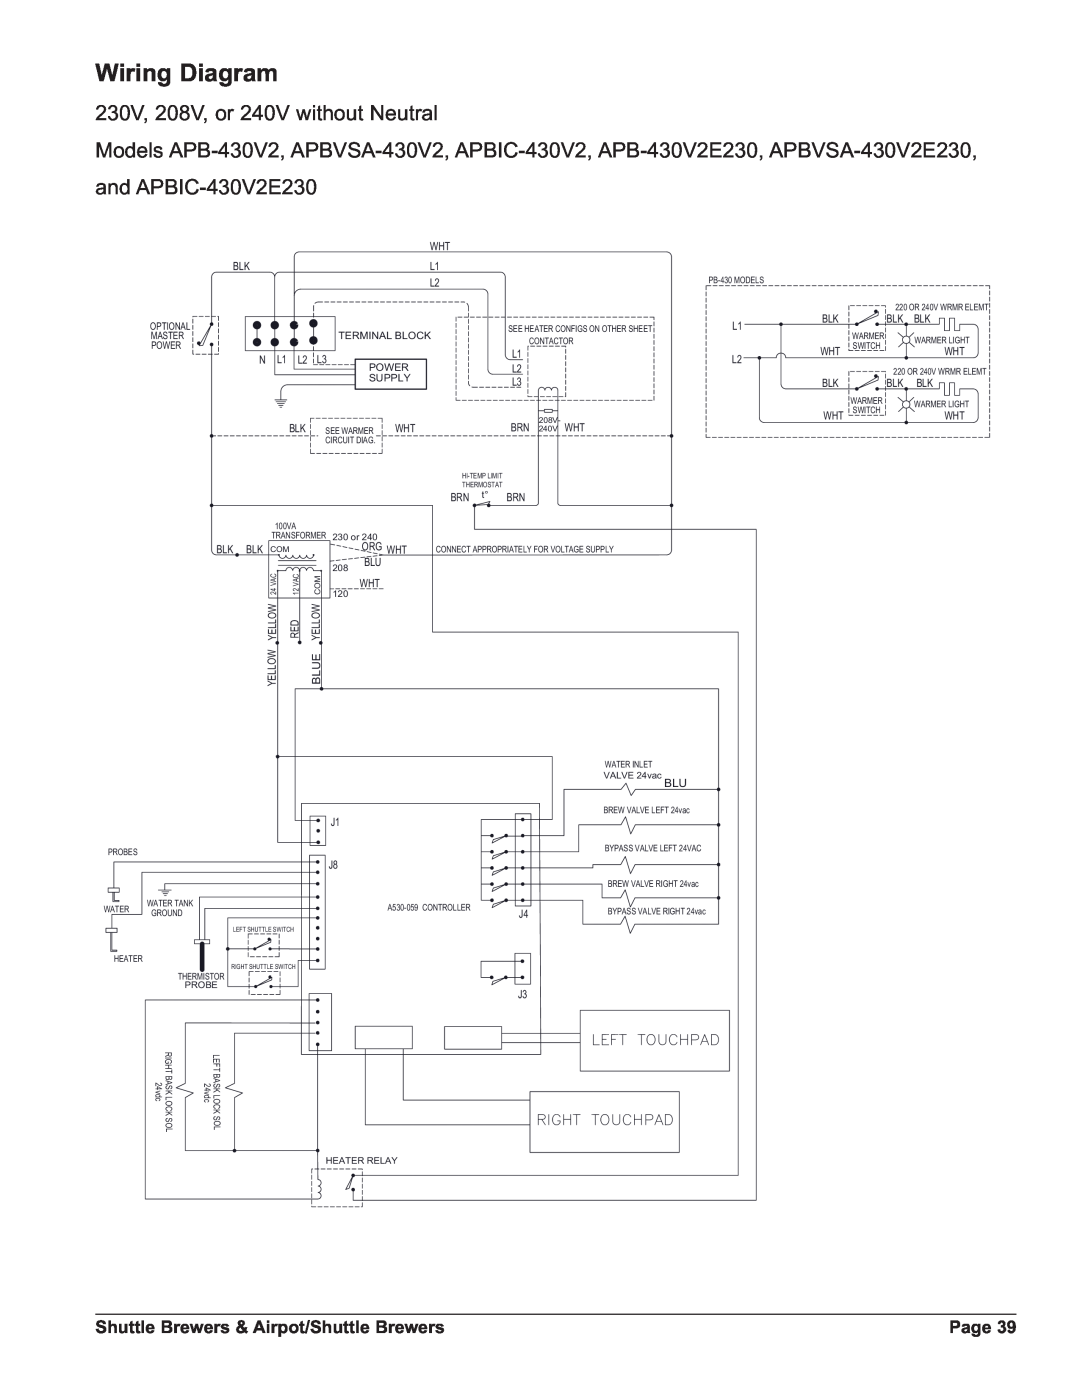 Grindmaster 230V, 208V, or 240V without Neutral, and APBIC-430V2E230, Wiring Diagram, Page, 24ġ4/5#0!$, 1 / 